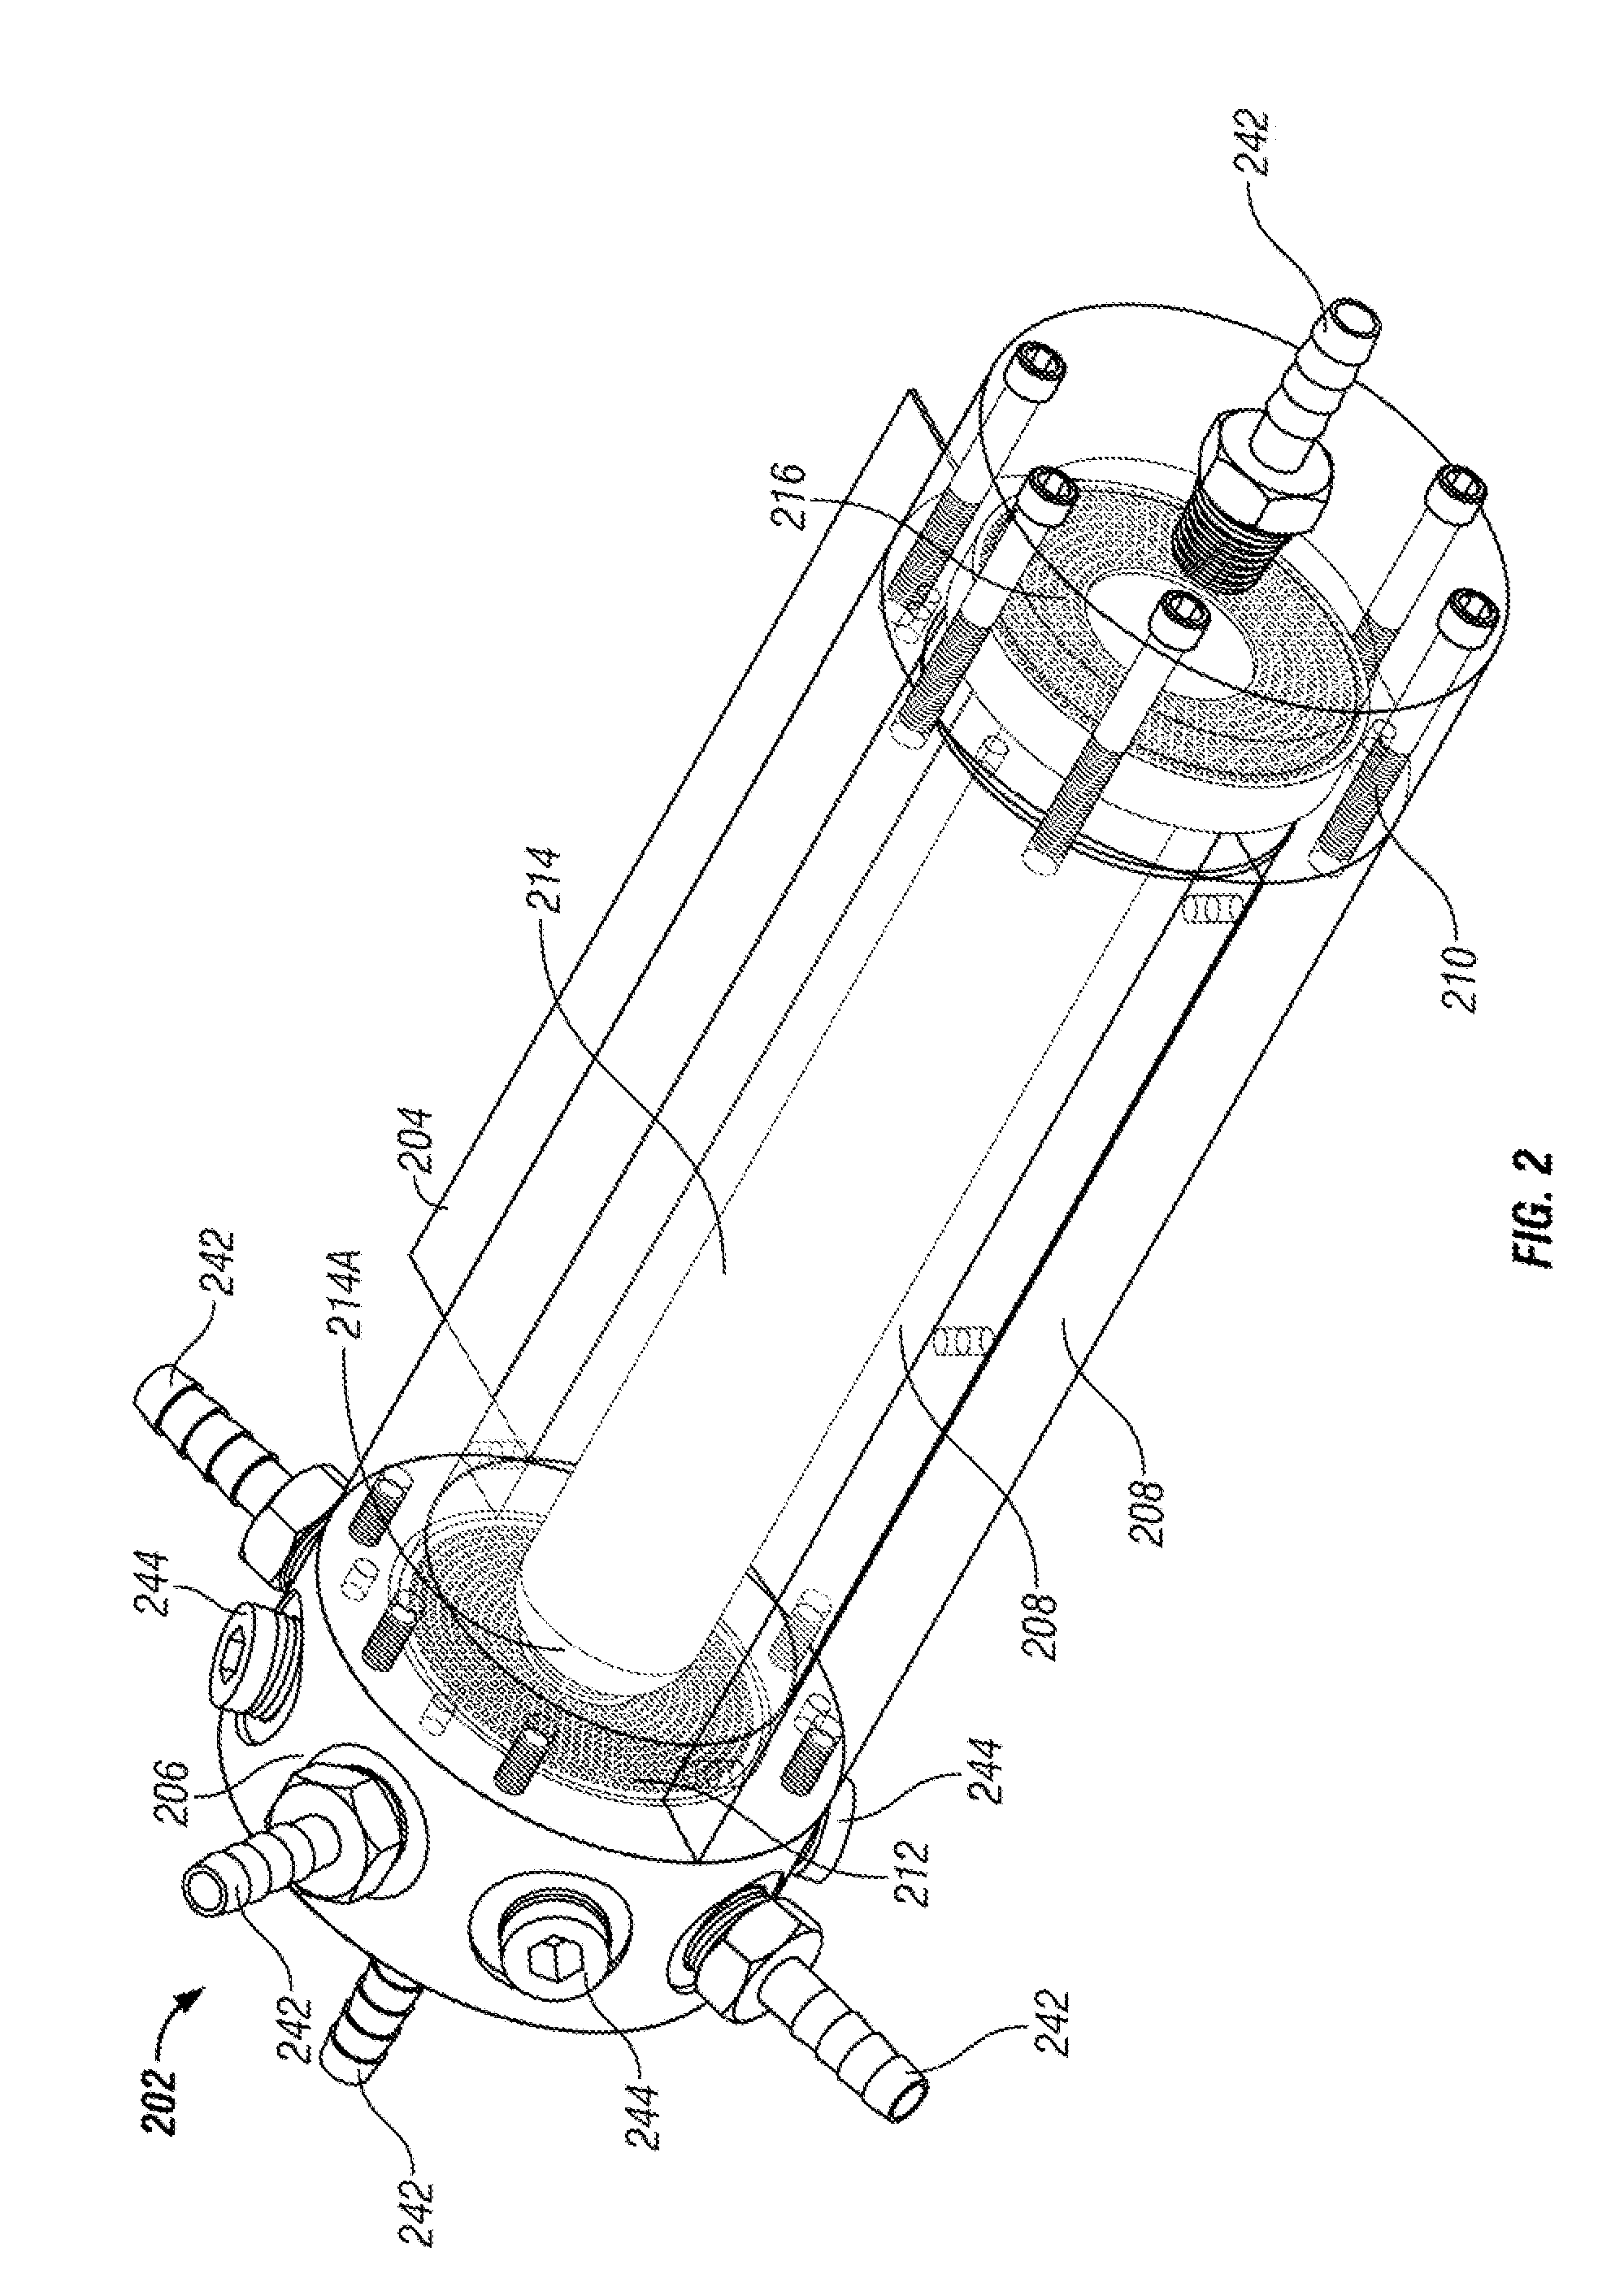 Portable Ultrafine Particle Sizer (PUPS) Apparatus